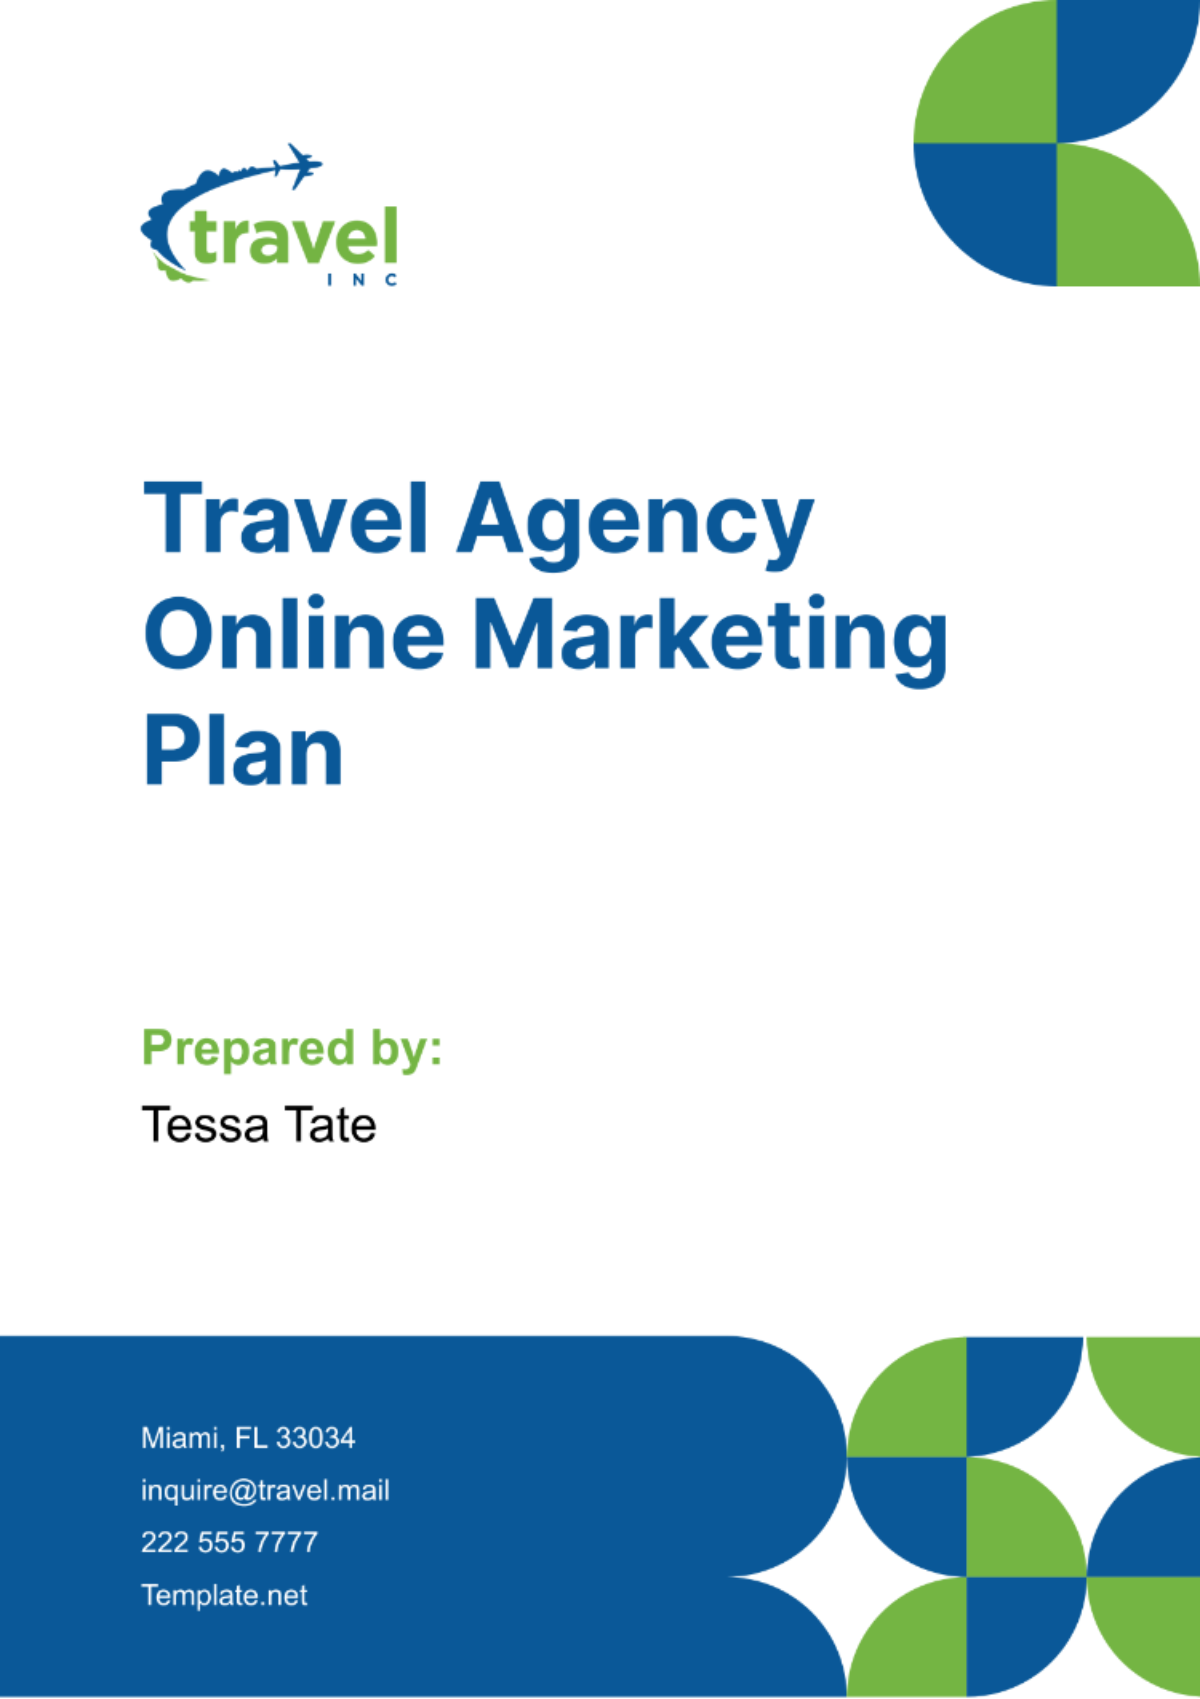 Travel Agency Online Marketing Plan Template